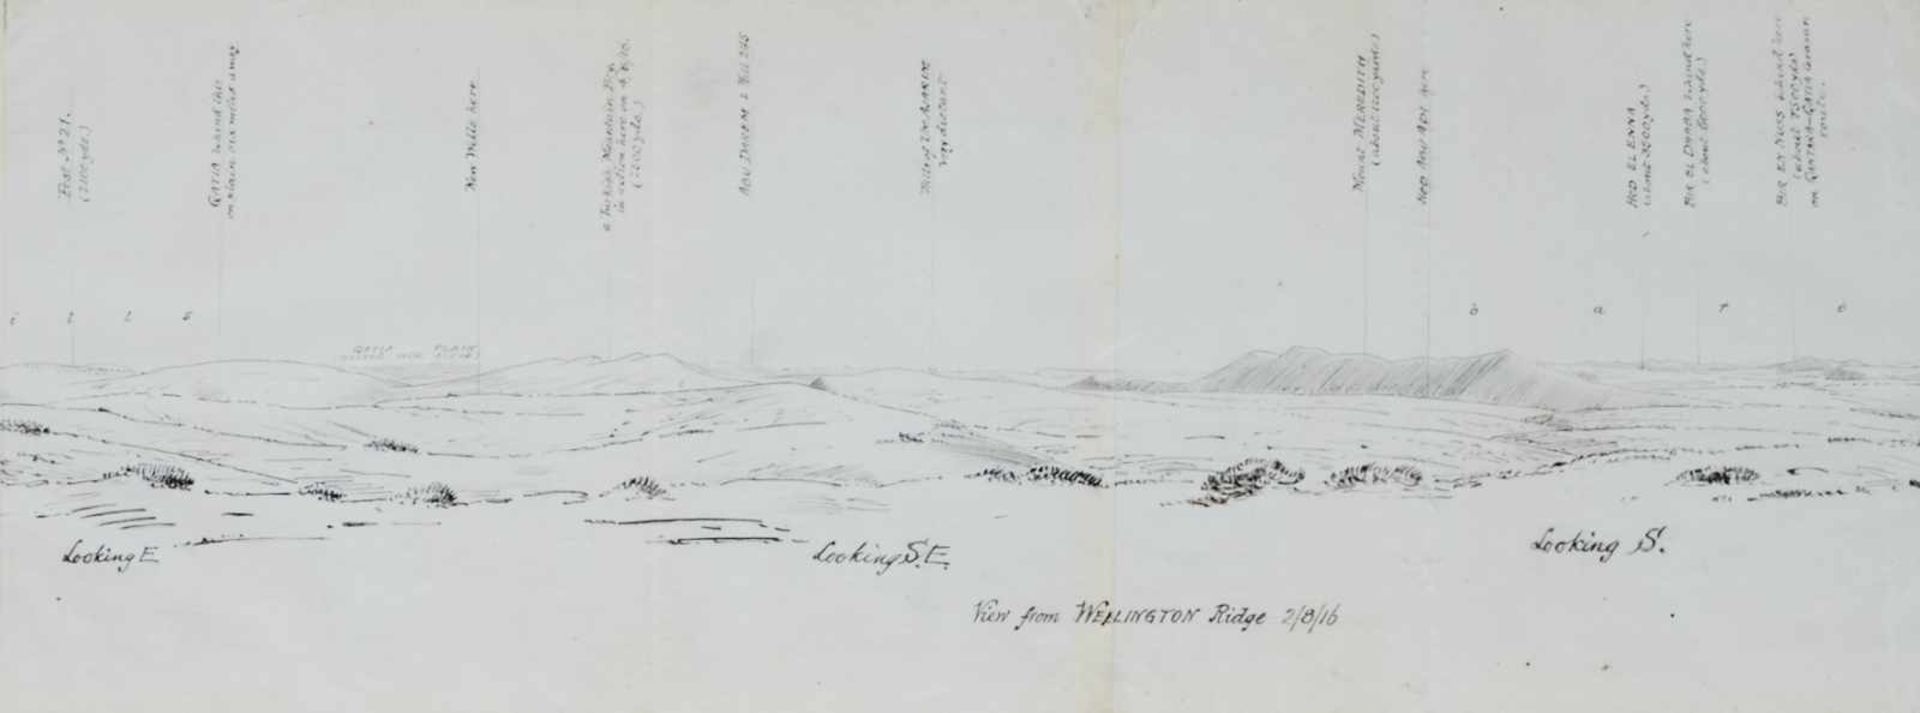 Romani-Schlacht Panorama - "View from Wellington Ridge", mit detaillierterBeschriftung.